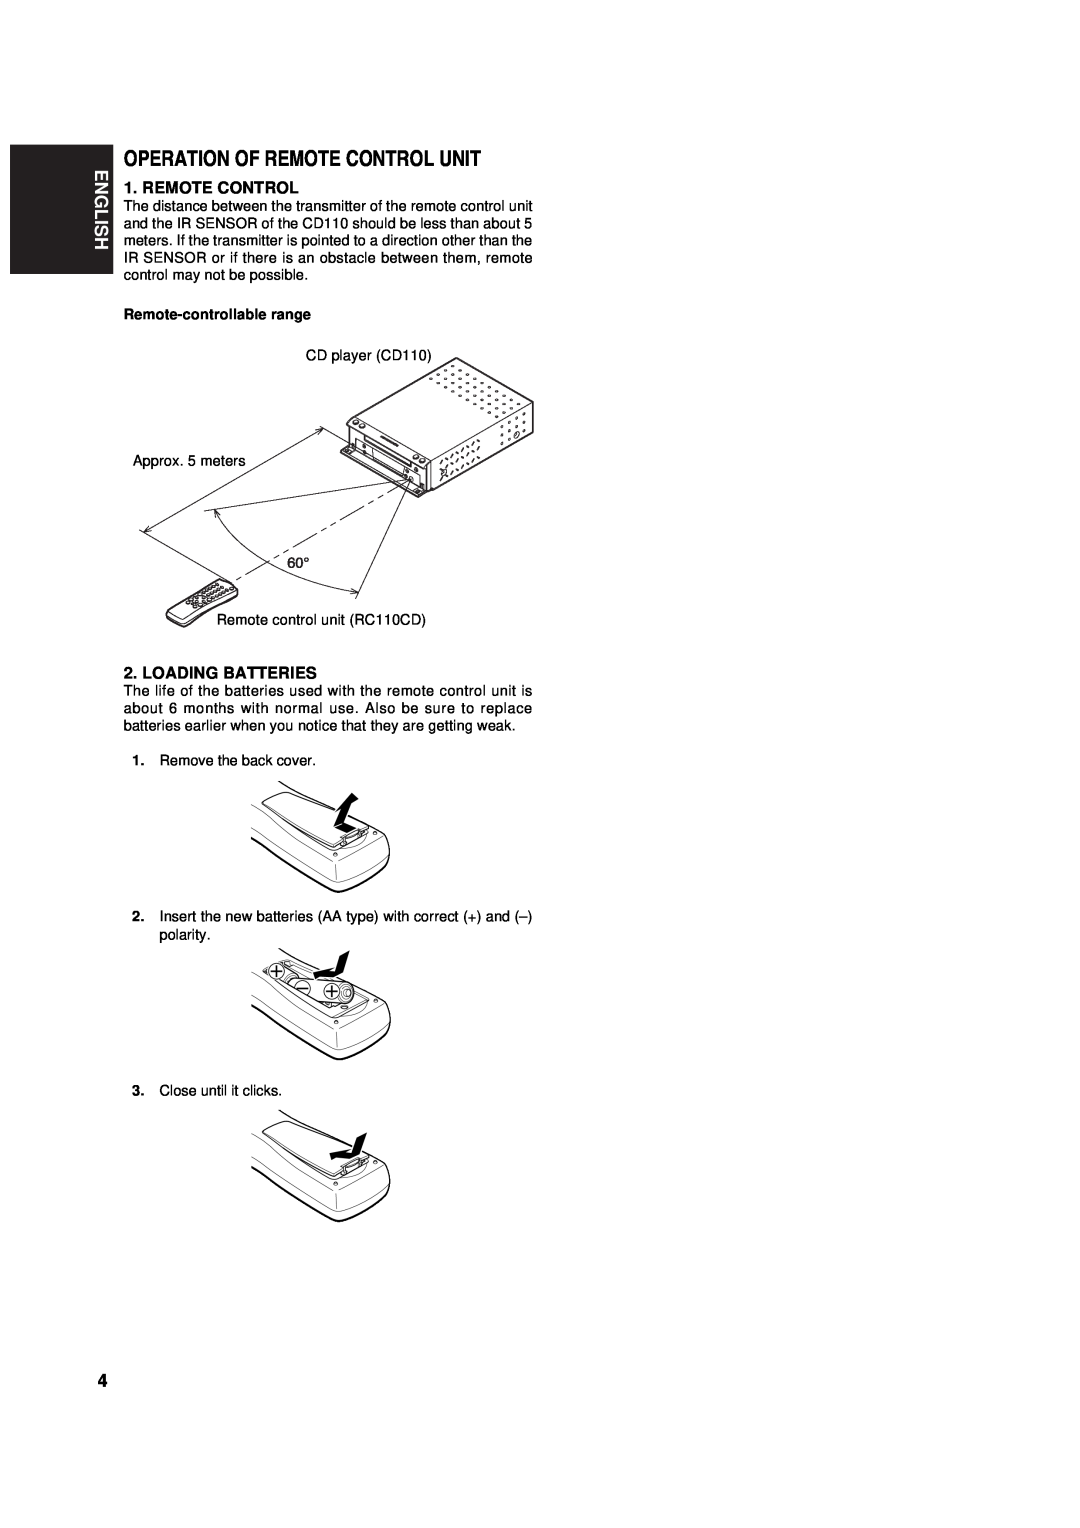 Marantz CD110 manual Operation Of Remote Control Unit, English, Loading Batteries, Remote-controllablerange 